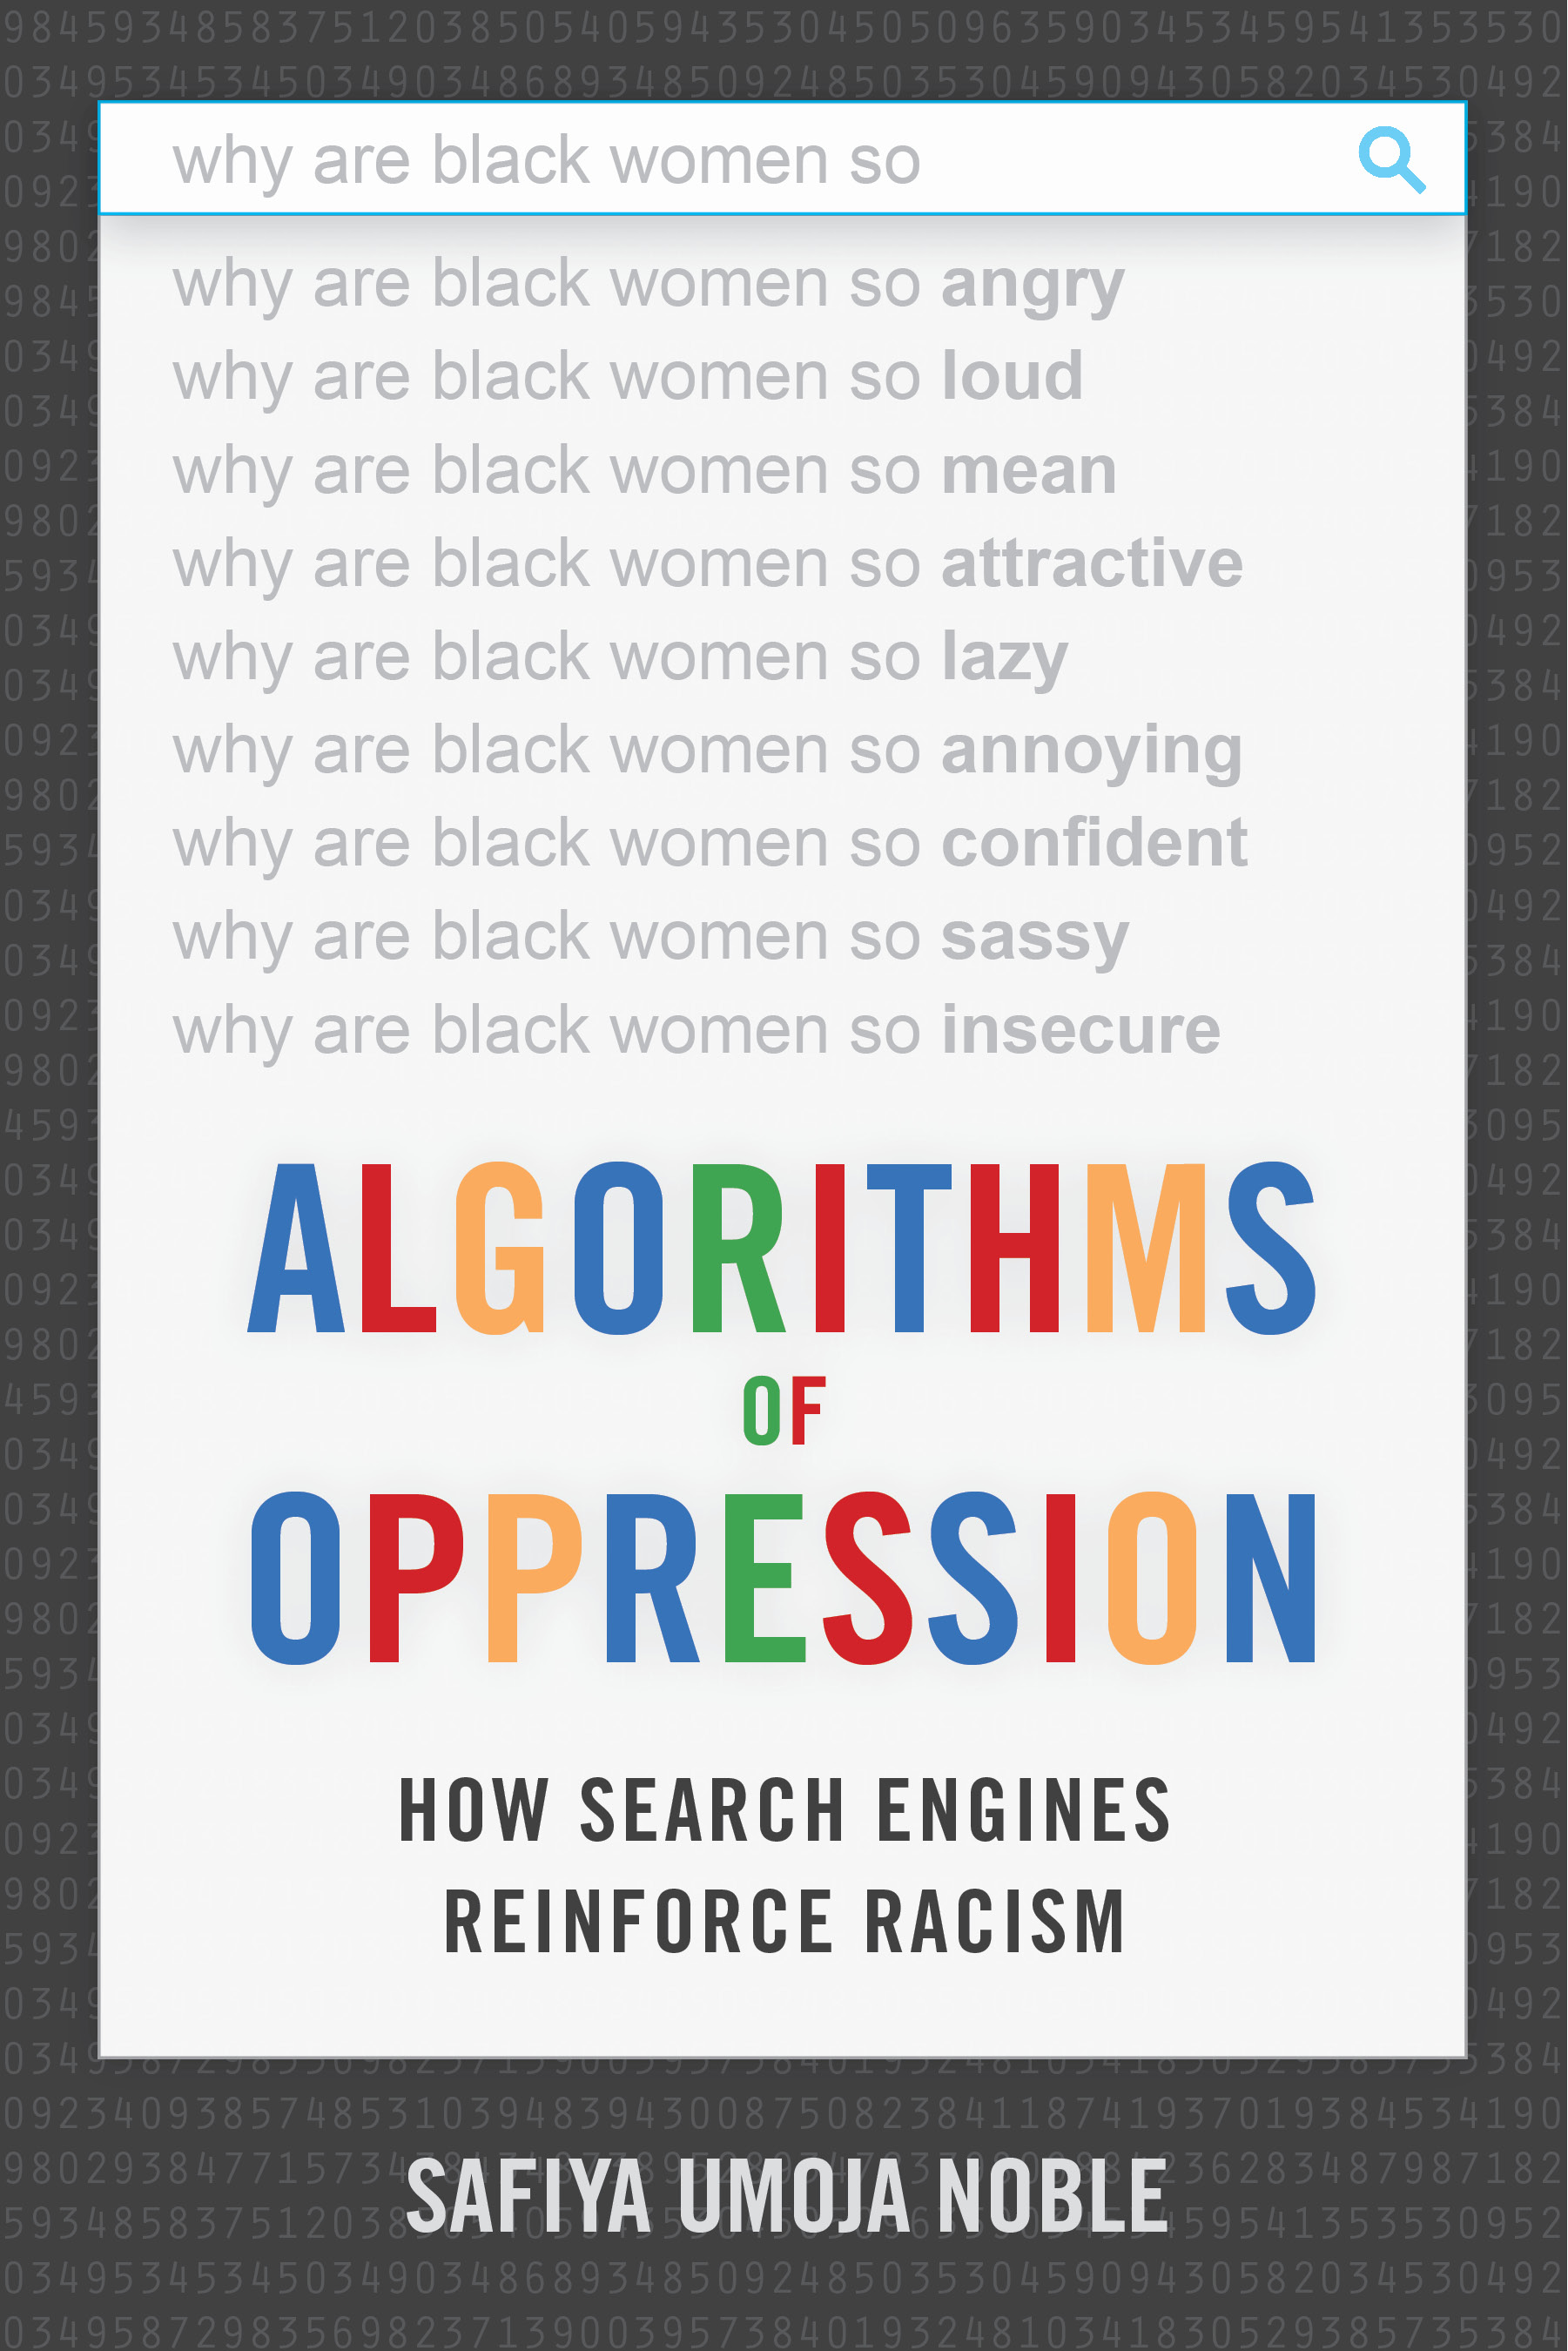 School Ebony Porn - Google's Algorithm: History of Racism Against Black Women | Time